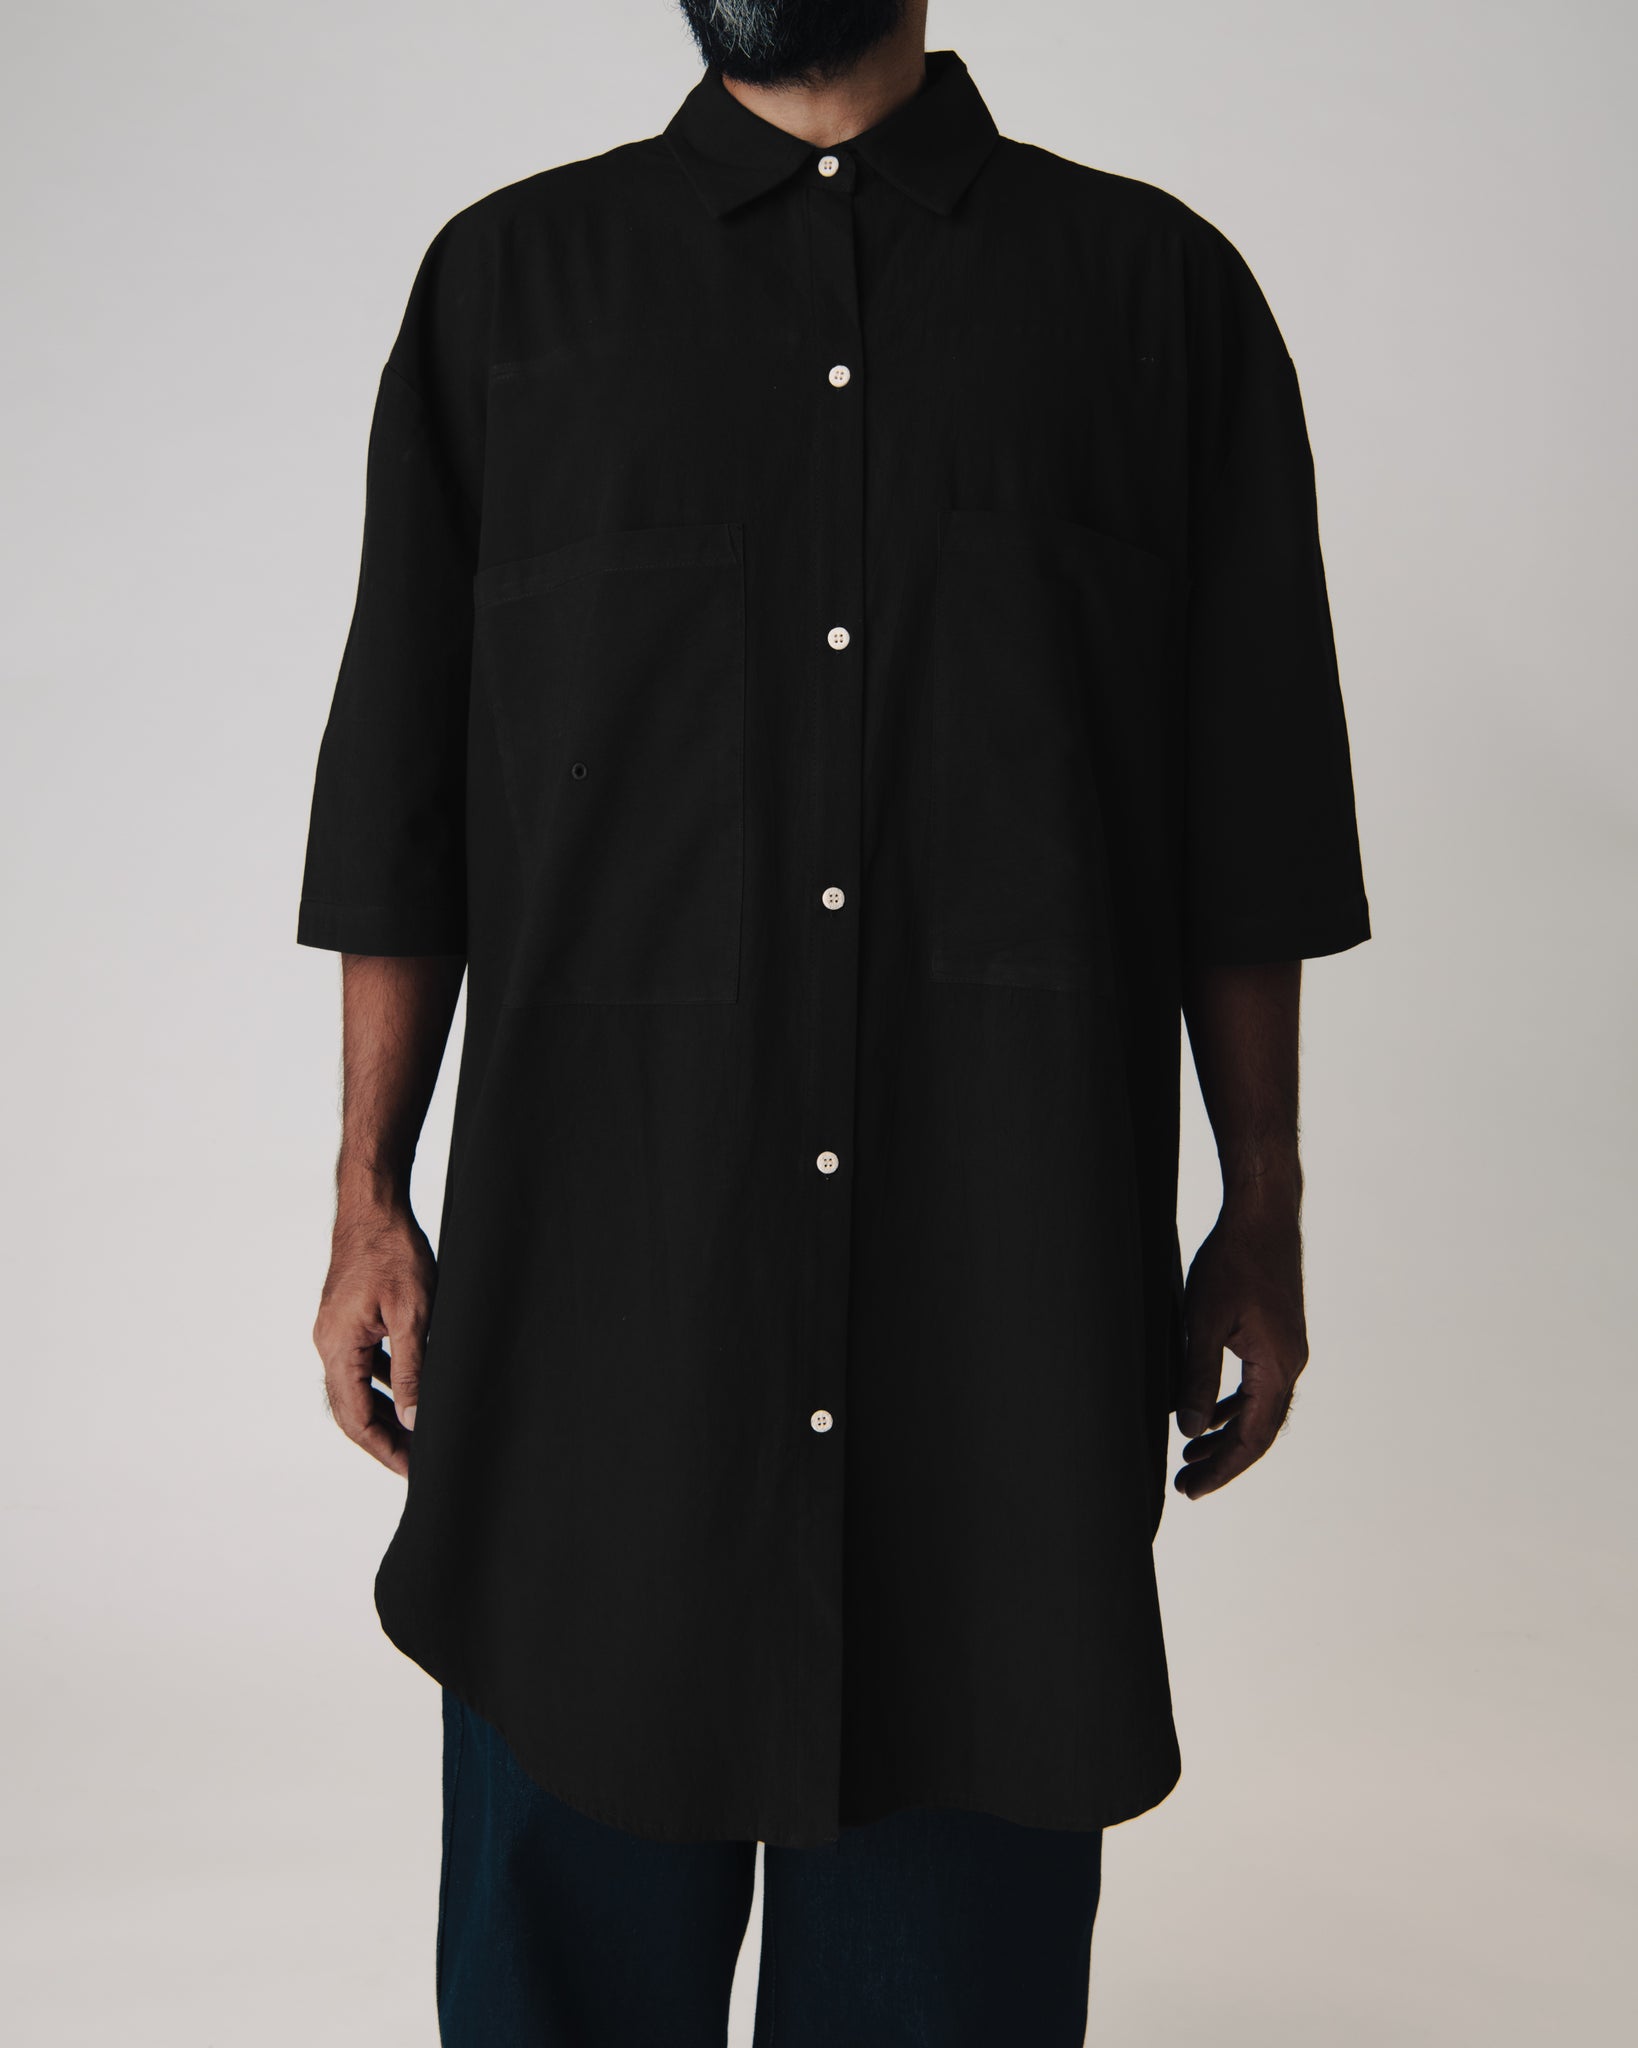 Unisex: The Shirt Dress (Black)